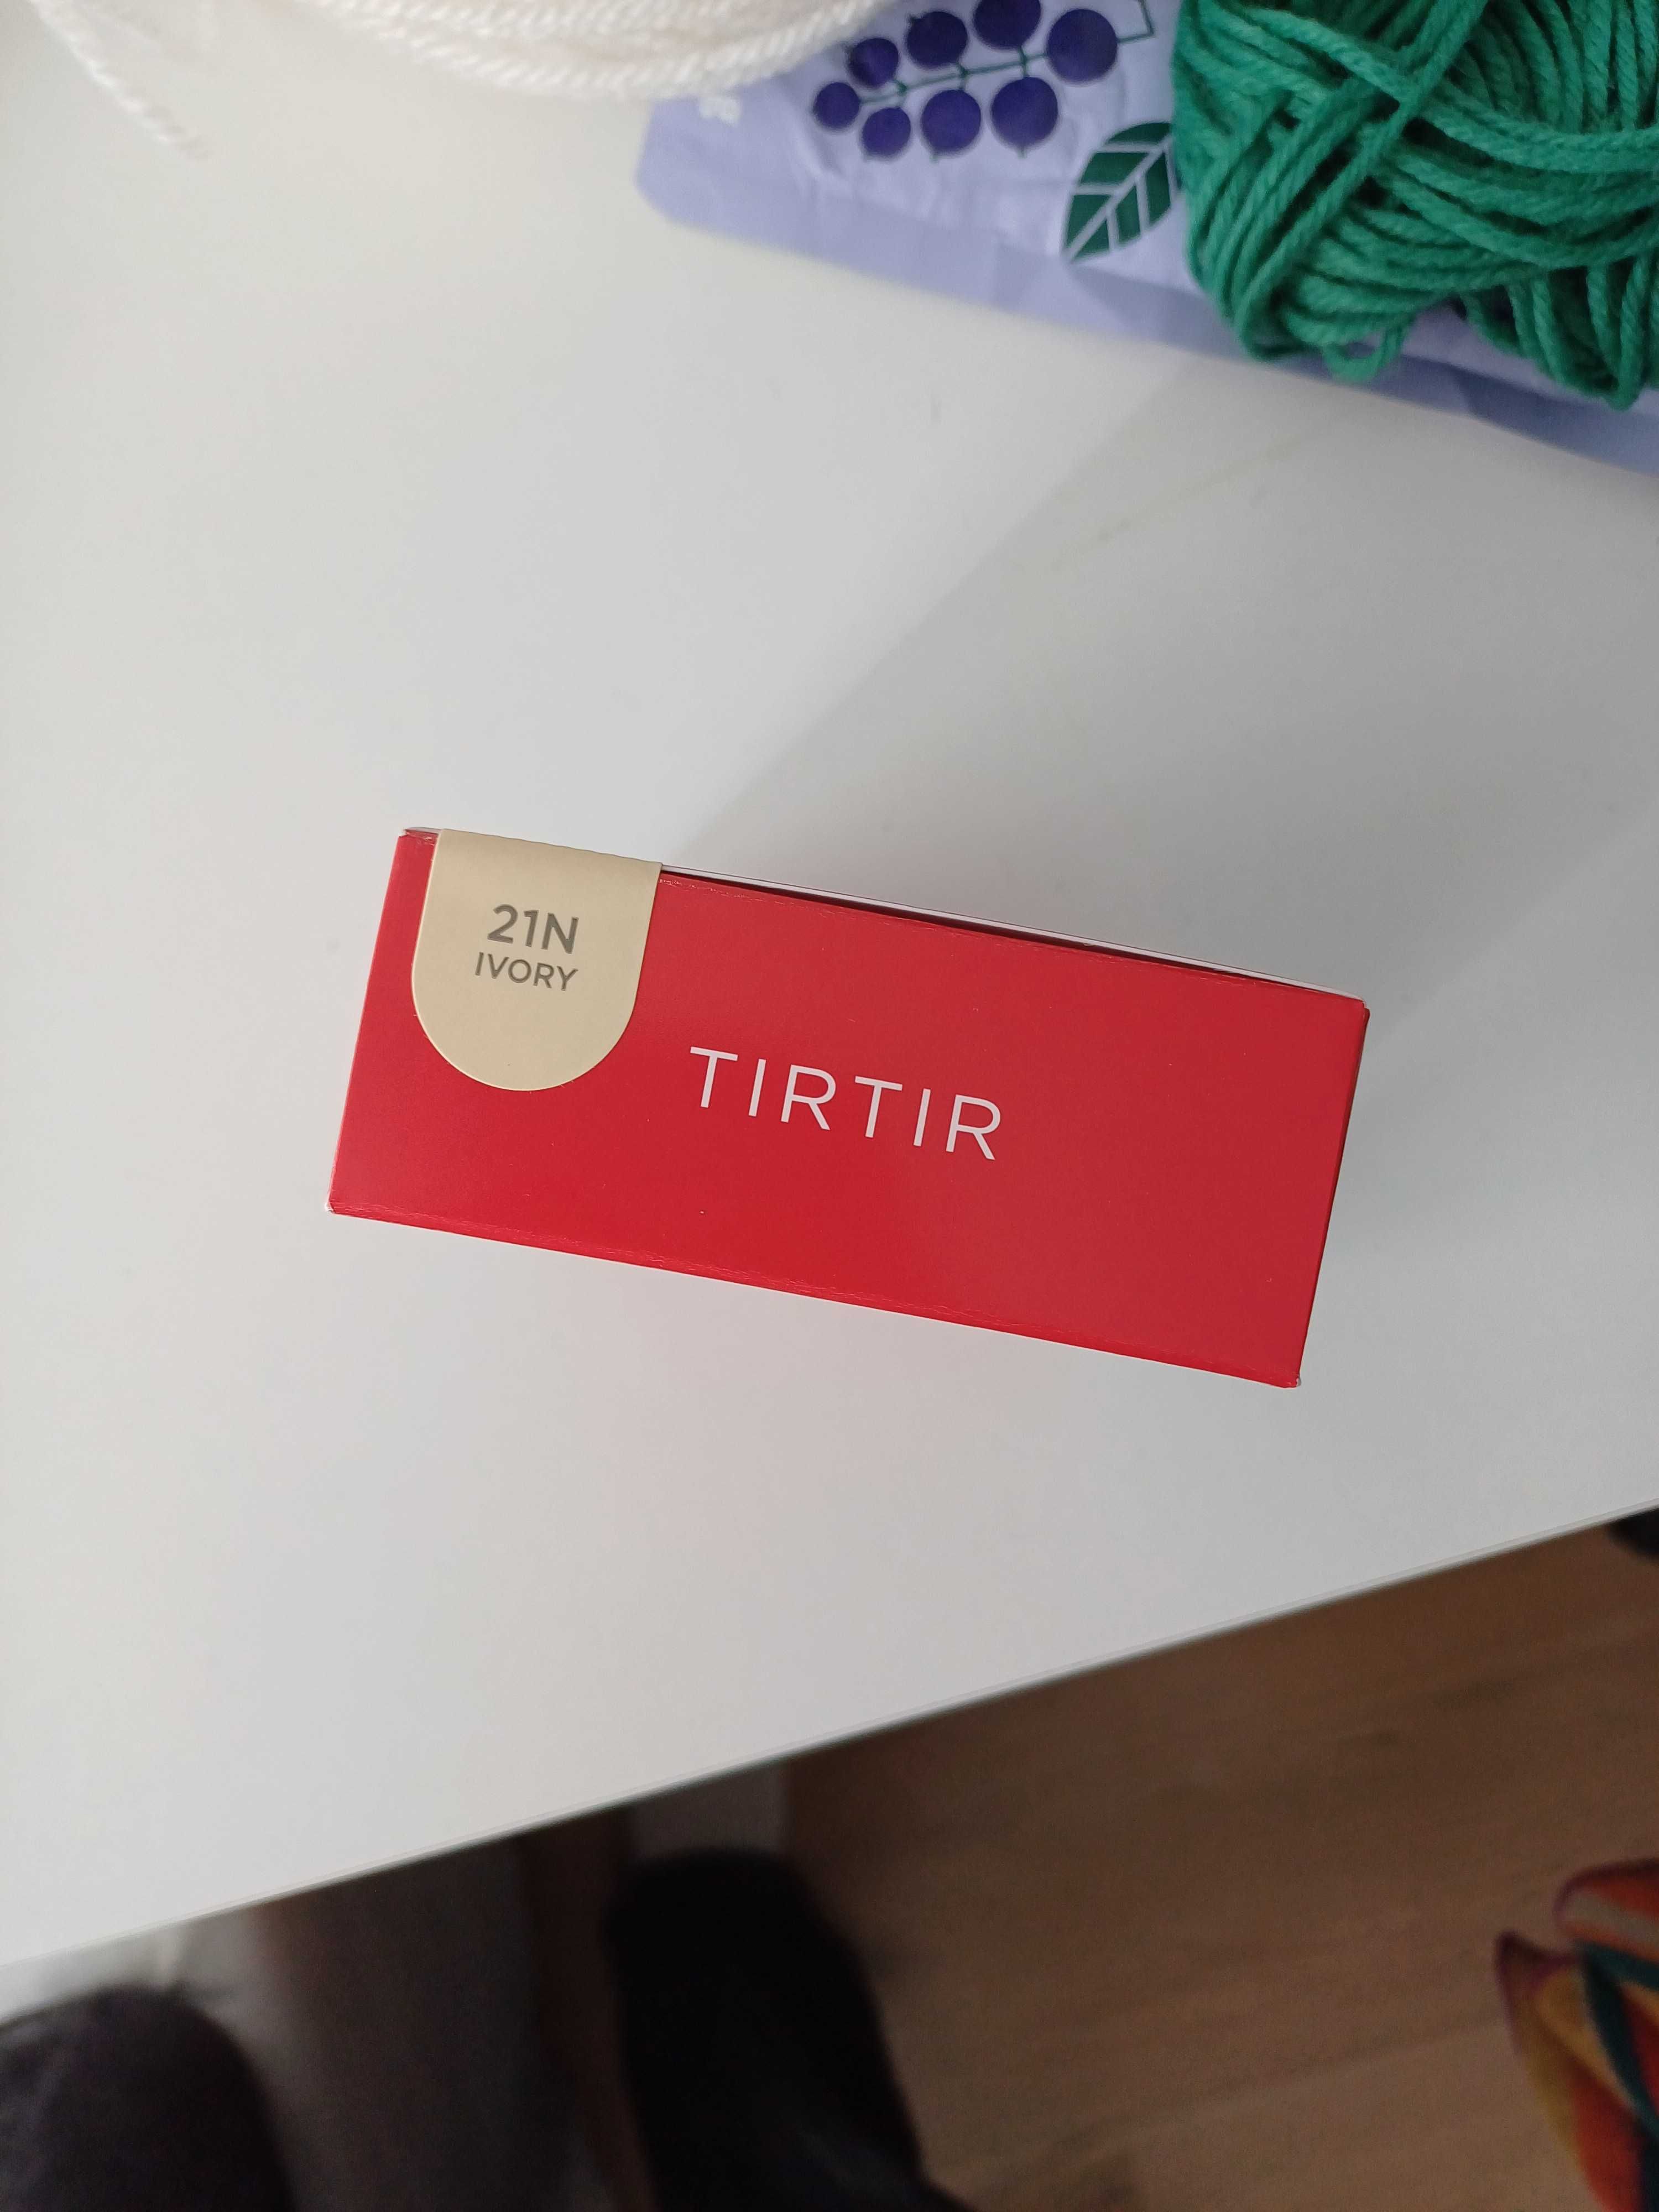 TIRTIR - mask fit red cushion 21N ivory podkład